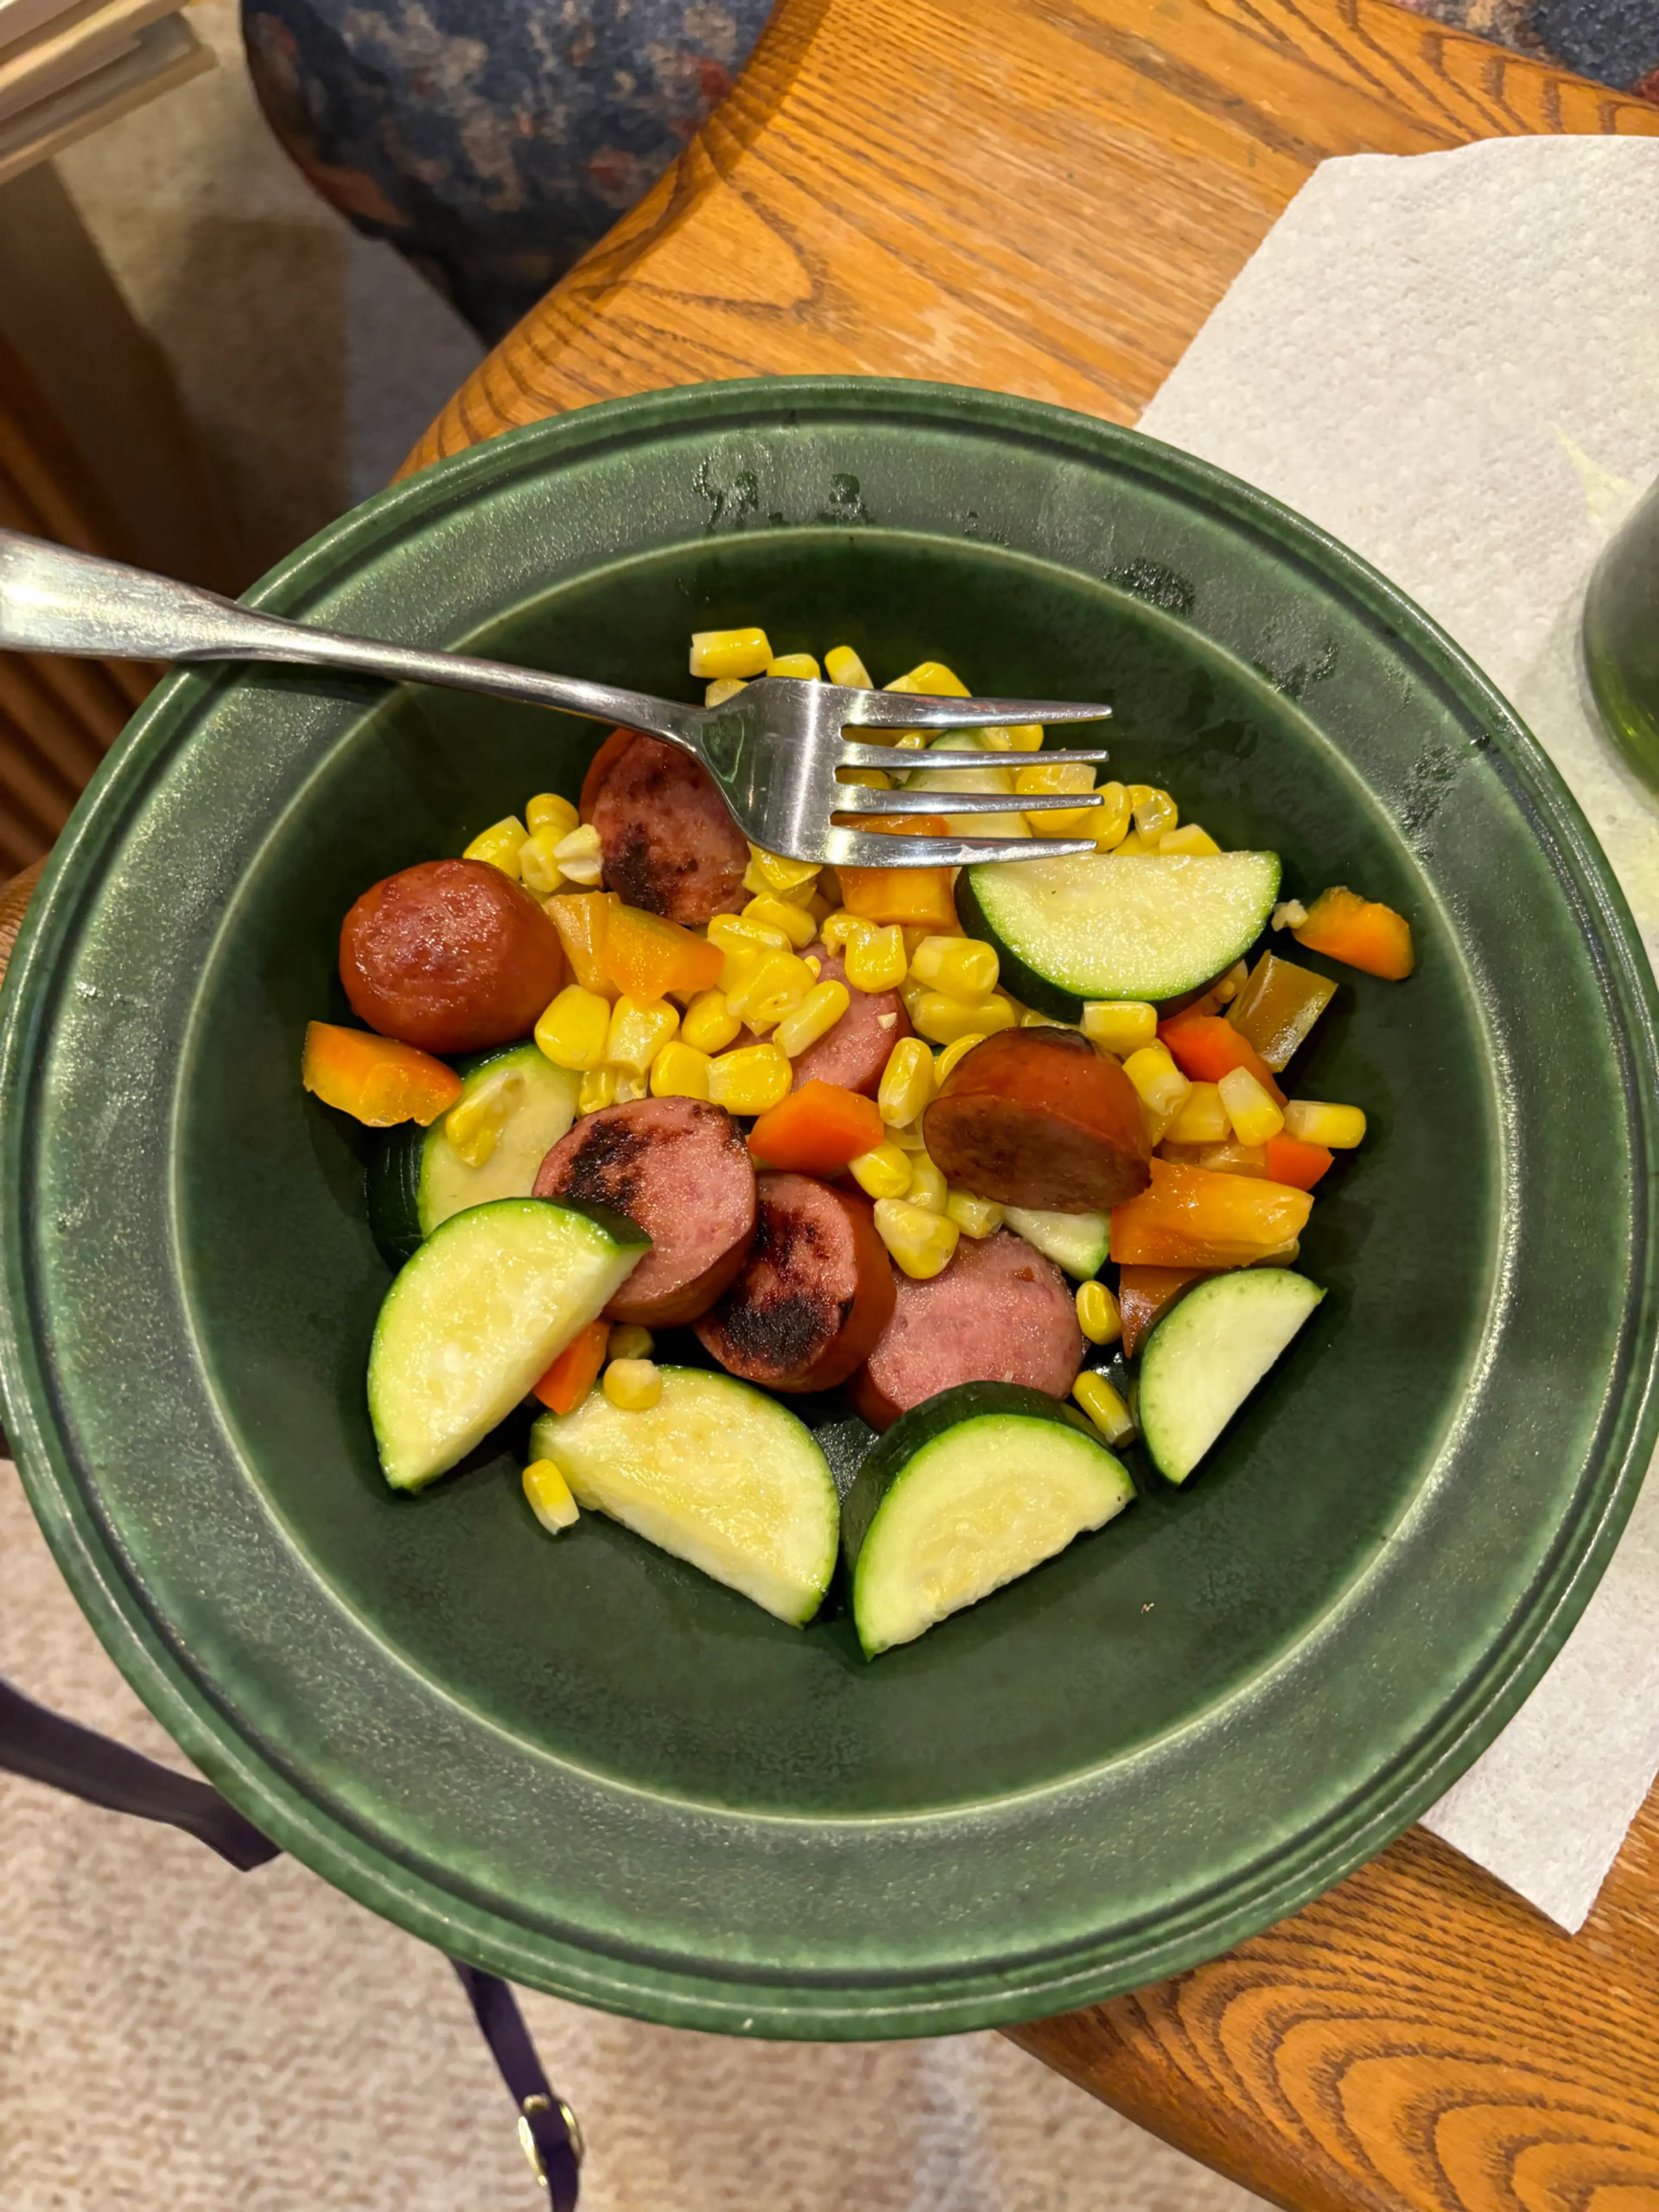 Sausage and Veggies Skillet - 30 Minute, One-Pan Meal